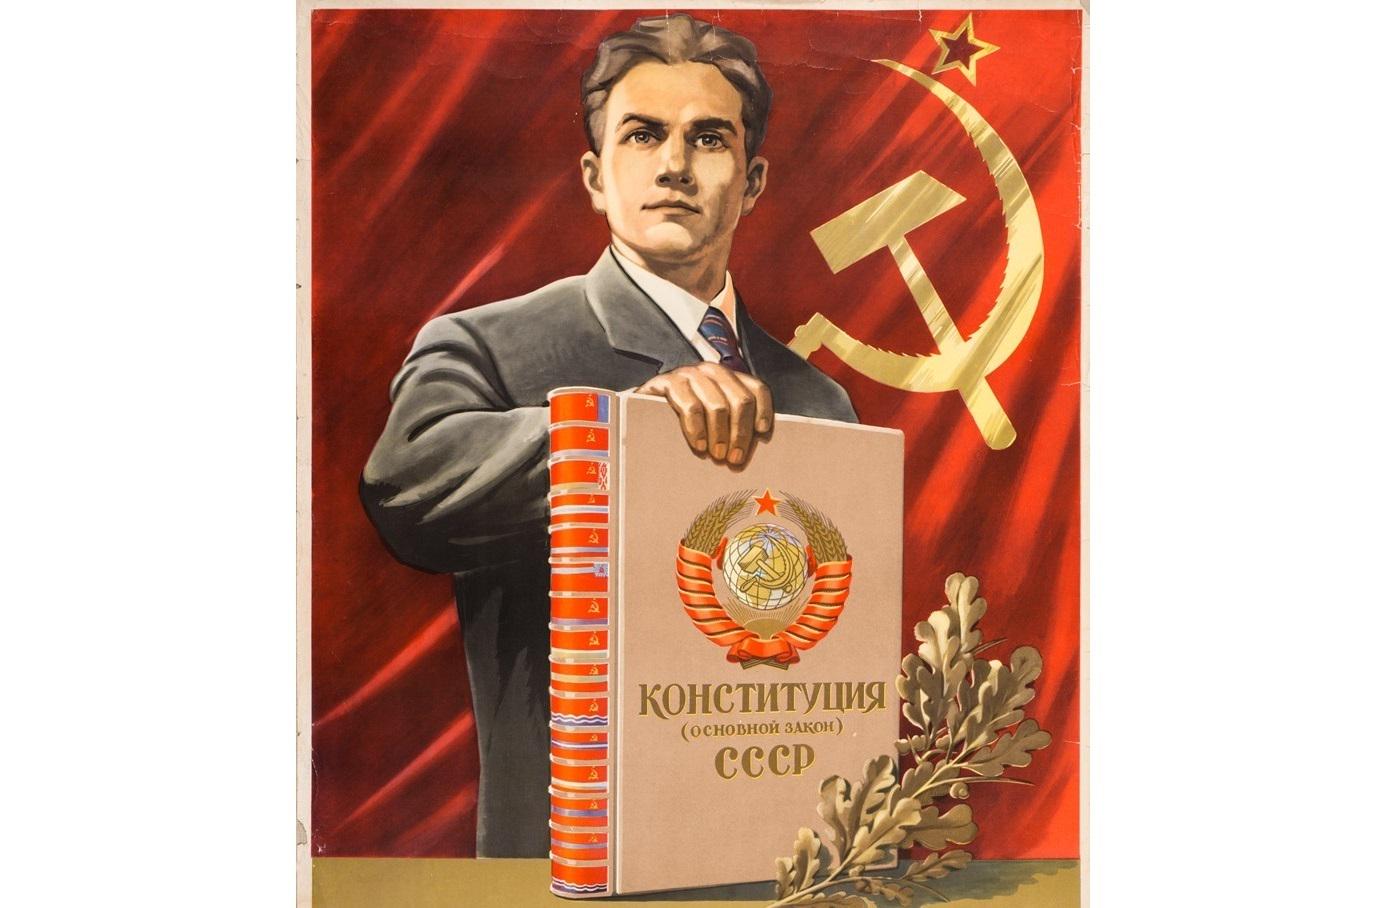 газета Завтра on Twitter: "7 октября 1977 года была принята "Брежневская"  Конституция СССР - Конституция развитого социализма http://t.co/Fst4UK8k3J"